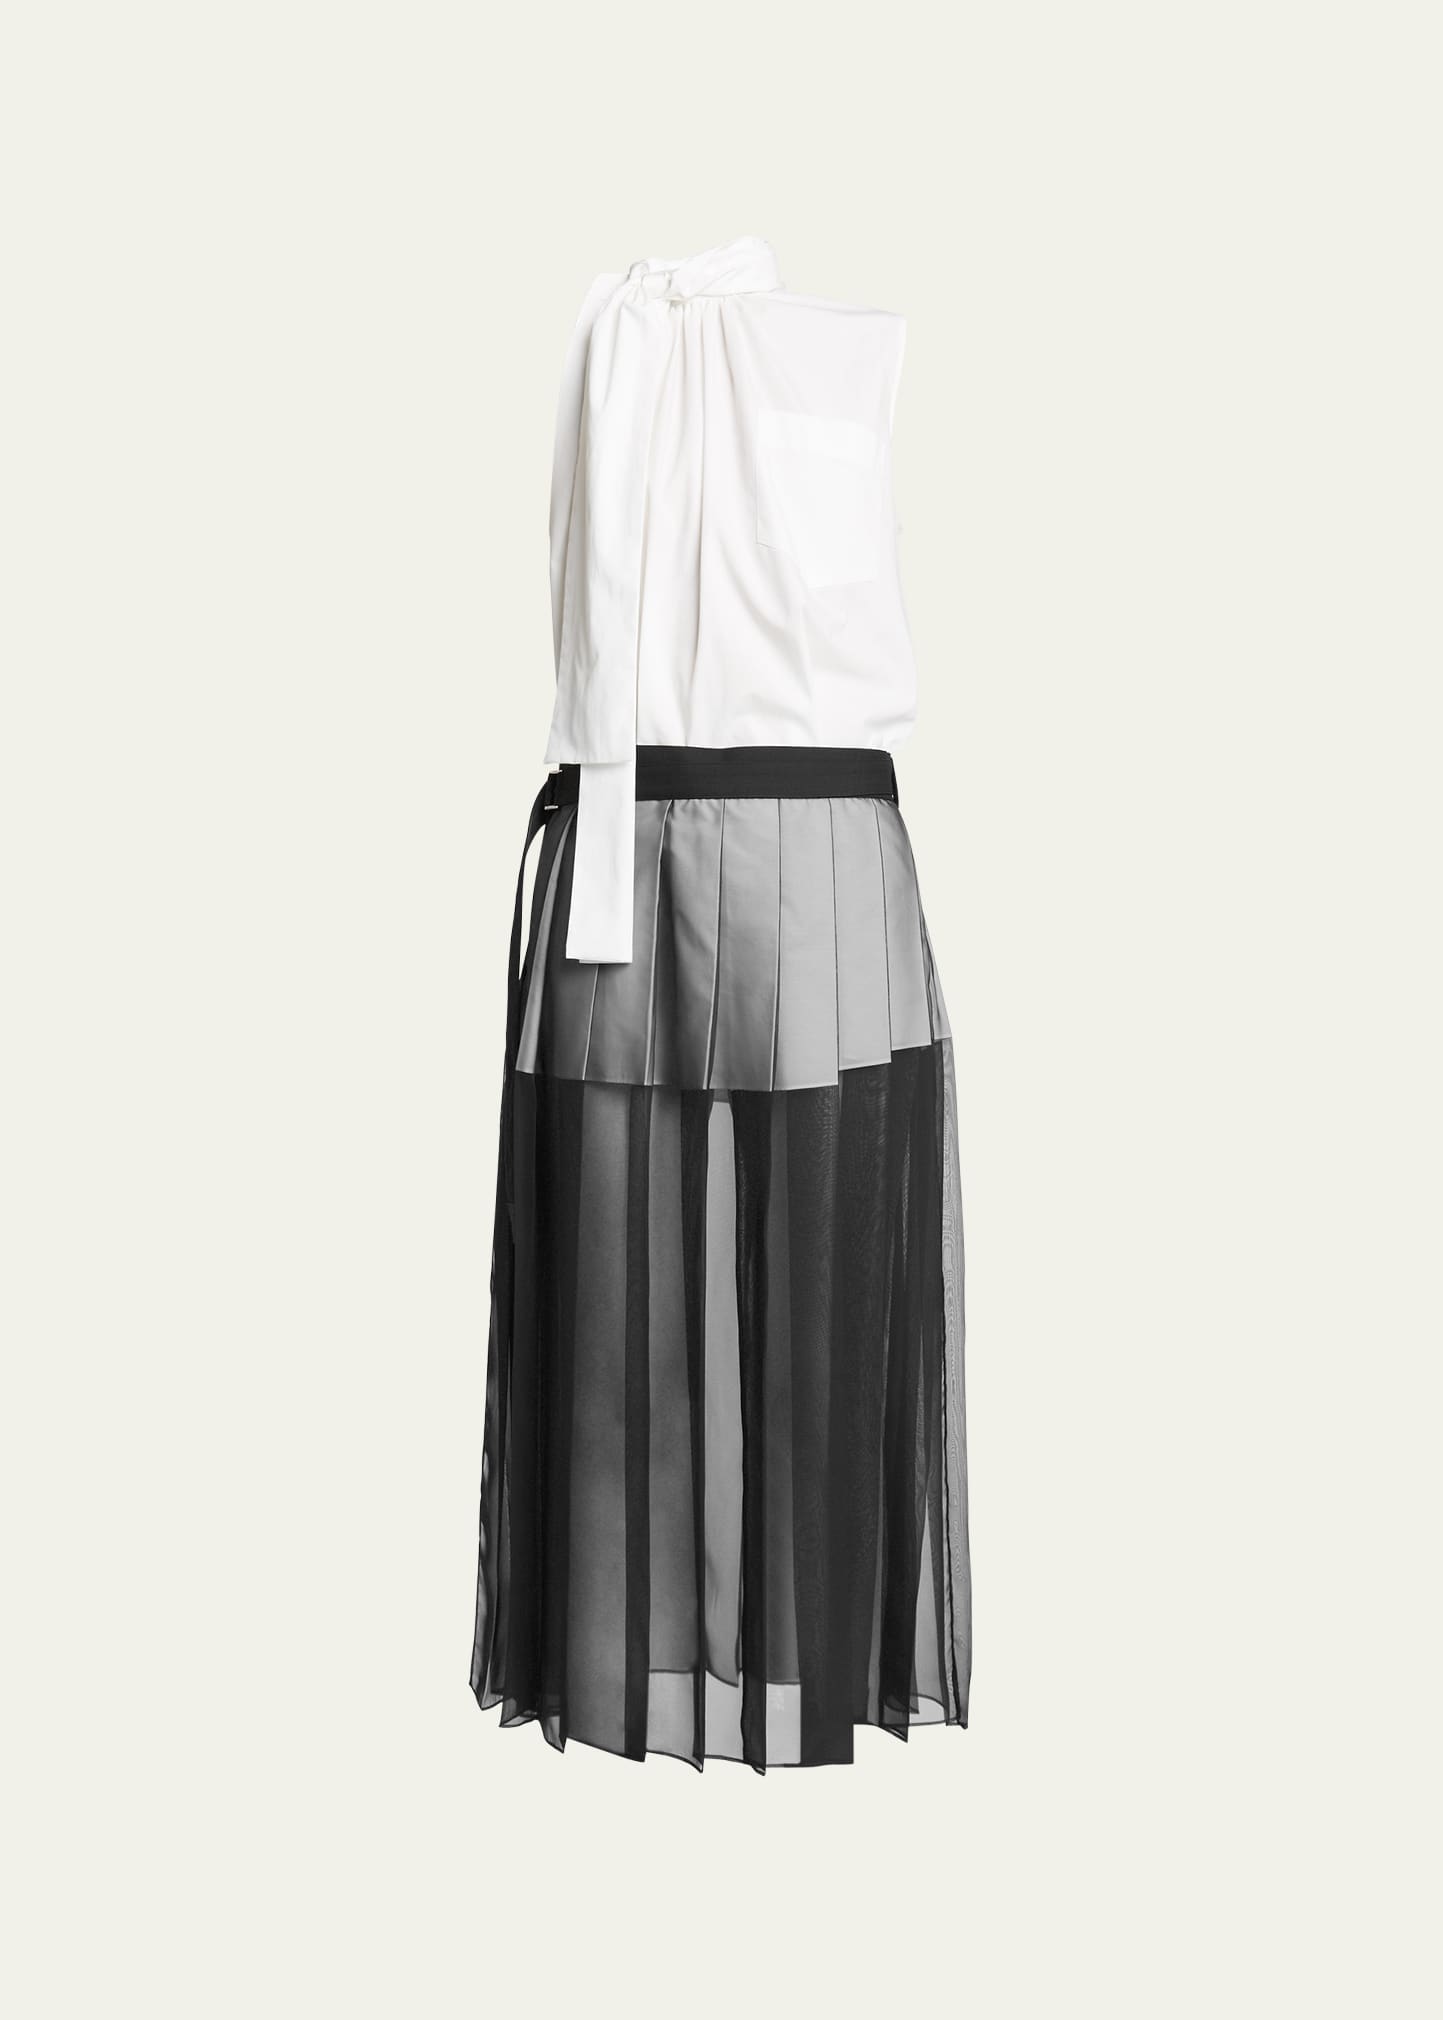 Tie-Neck Blouse Midi Dress with Sheer Skirt Overlay